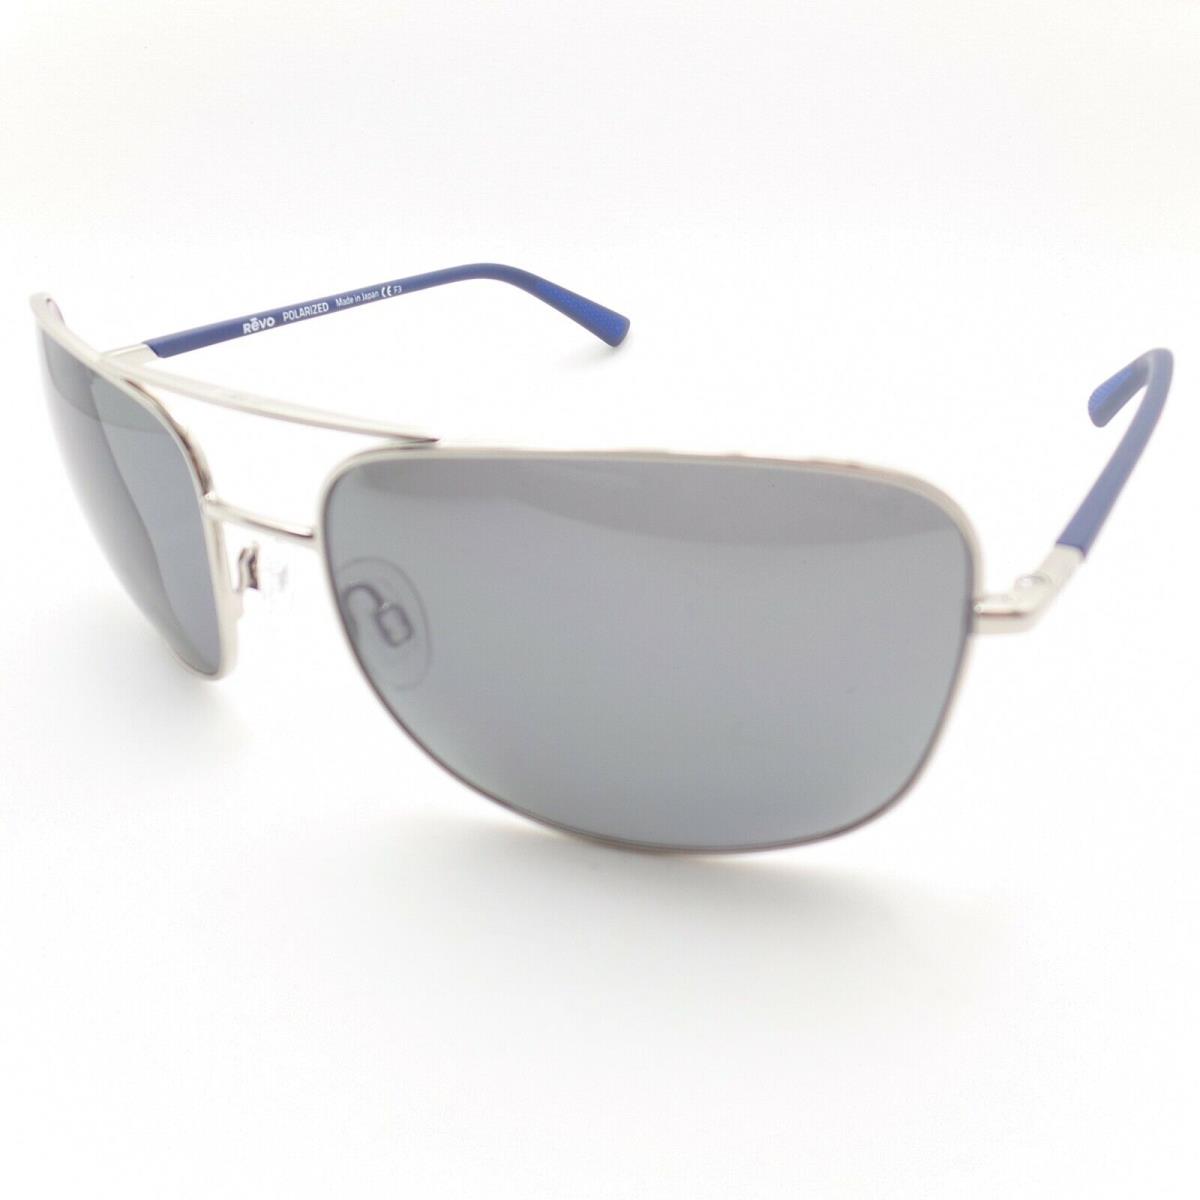 Revo sunglasses  - Gunmetal Frame, Graphite Lens